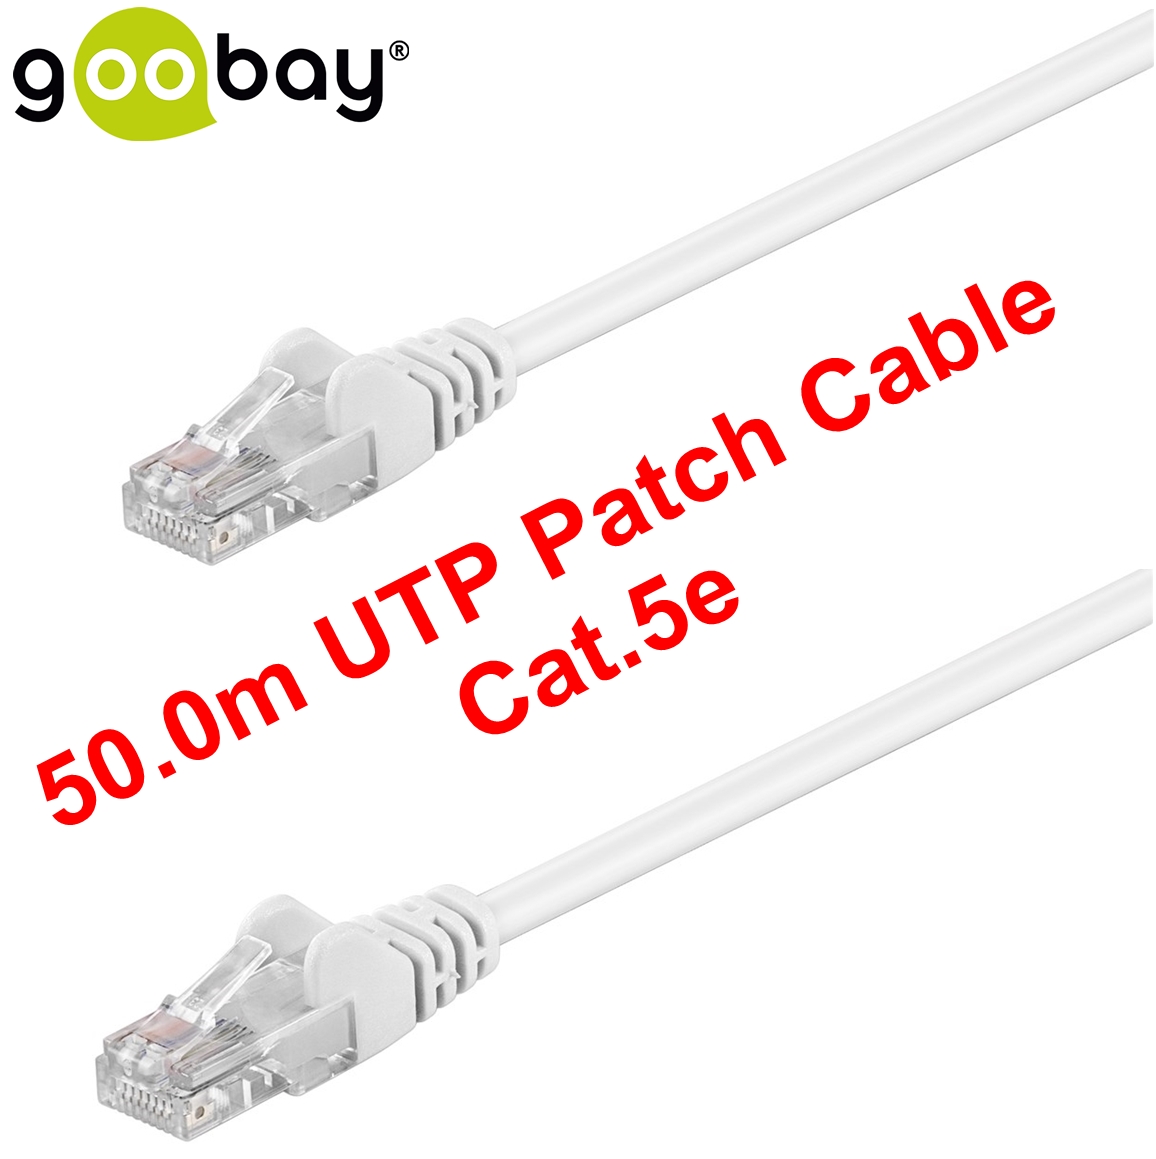 50.00m UTP Patch Cable Cat.5e GOOBAY (white)